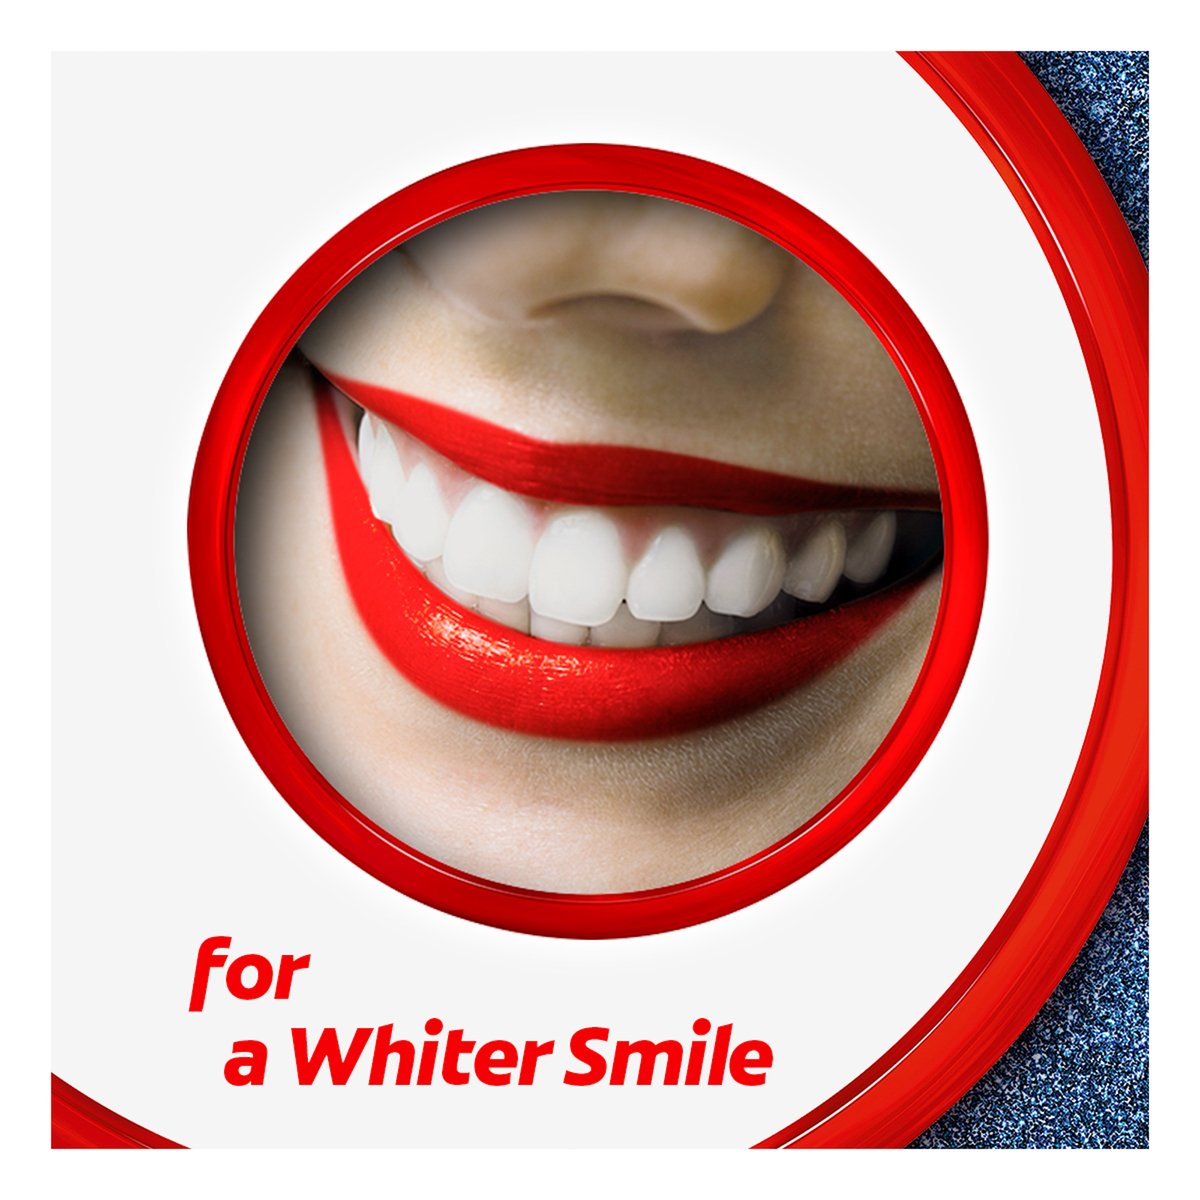 Colgate Max White Expert Original Whitening Toothpaste 75ml